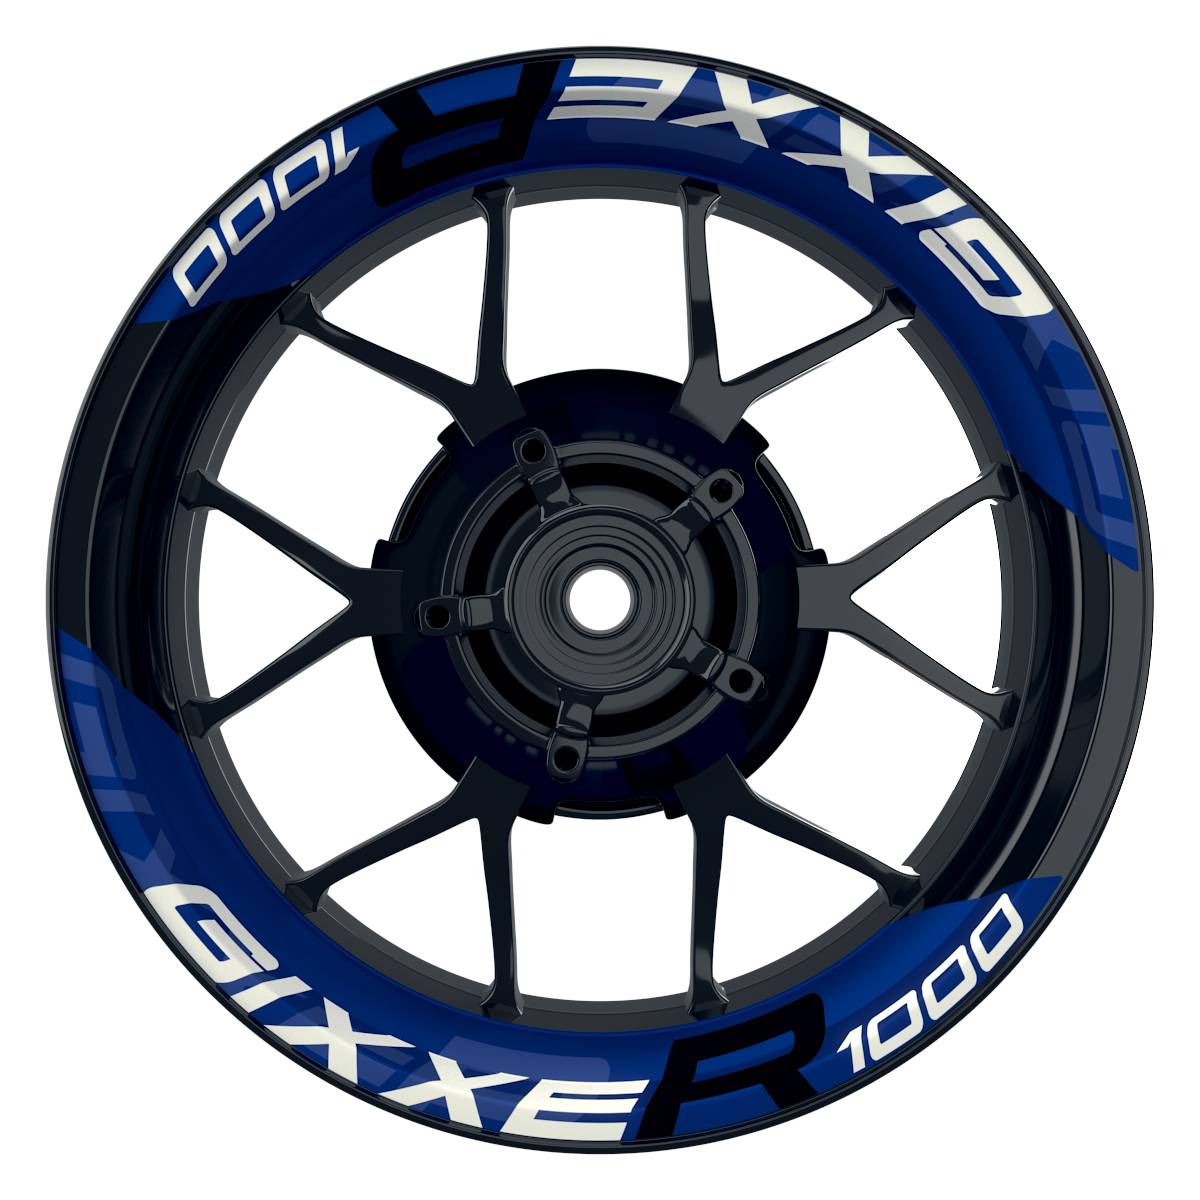 Wheelsticker Felgenaufkleber GIXXER1000 einfarbig V2 blau Frontansicht